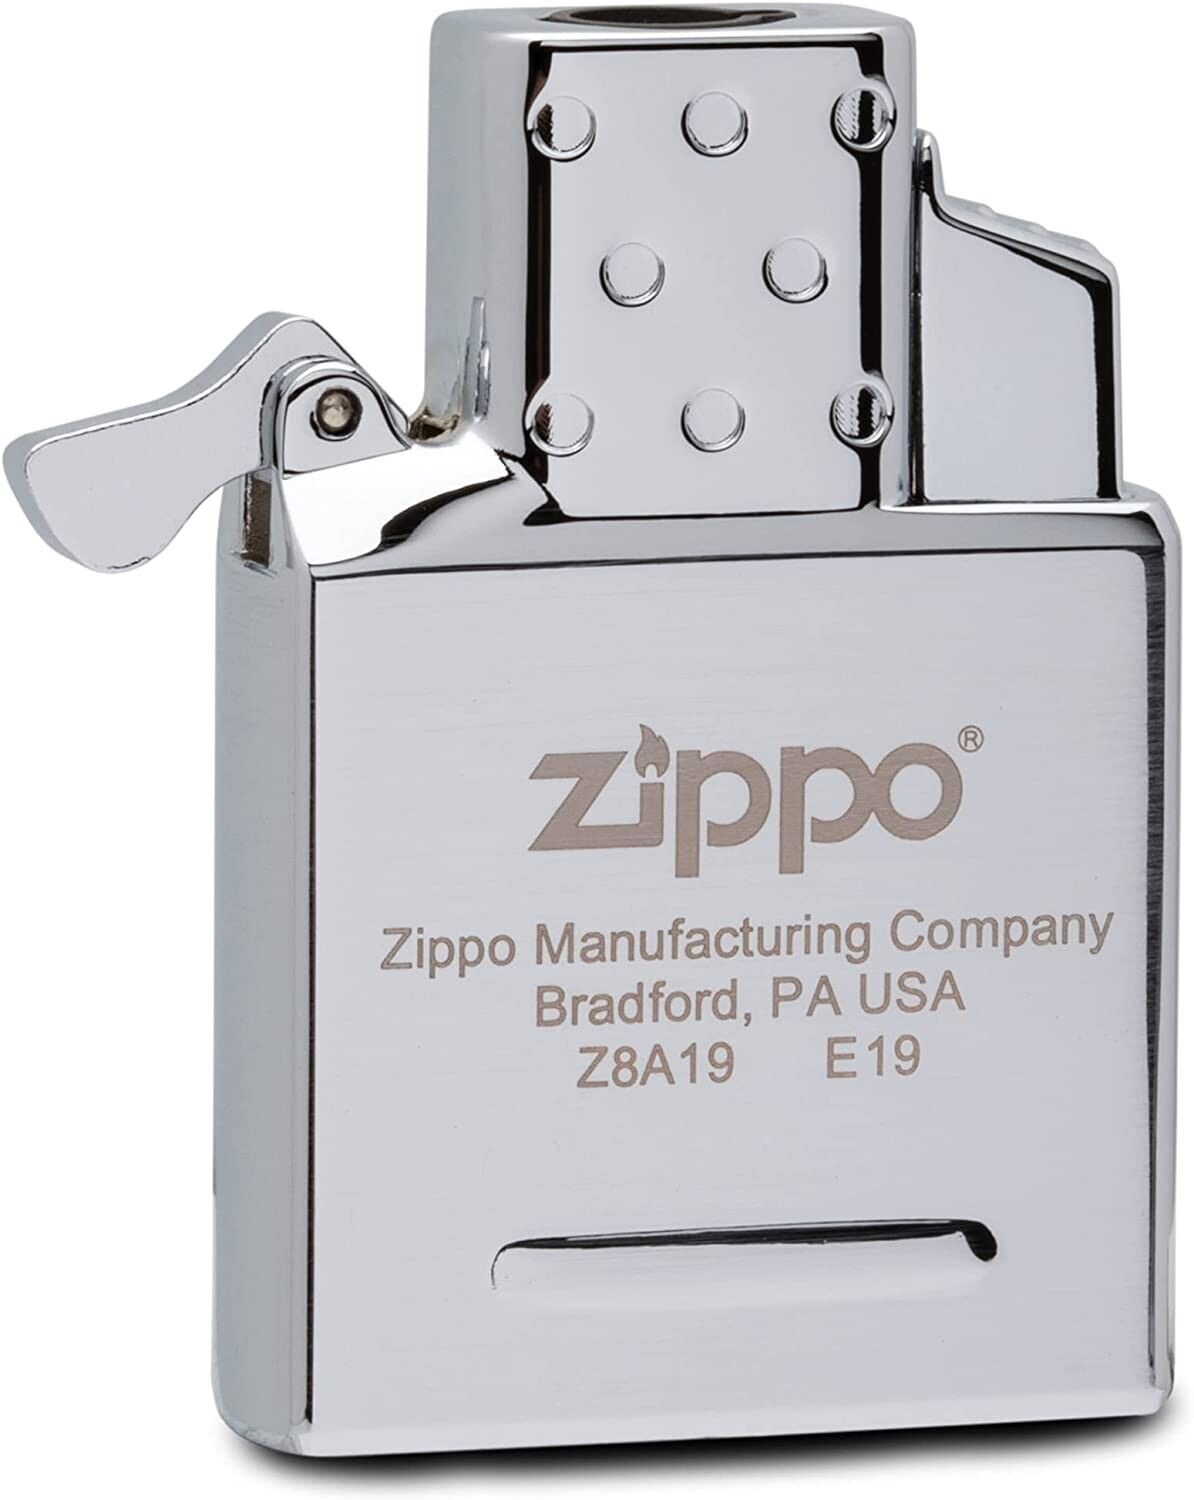 Zippo Butane Lighter Insert - Single Torch, Chrome 65826 Unfilled